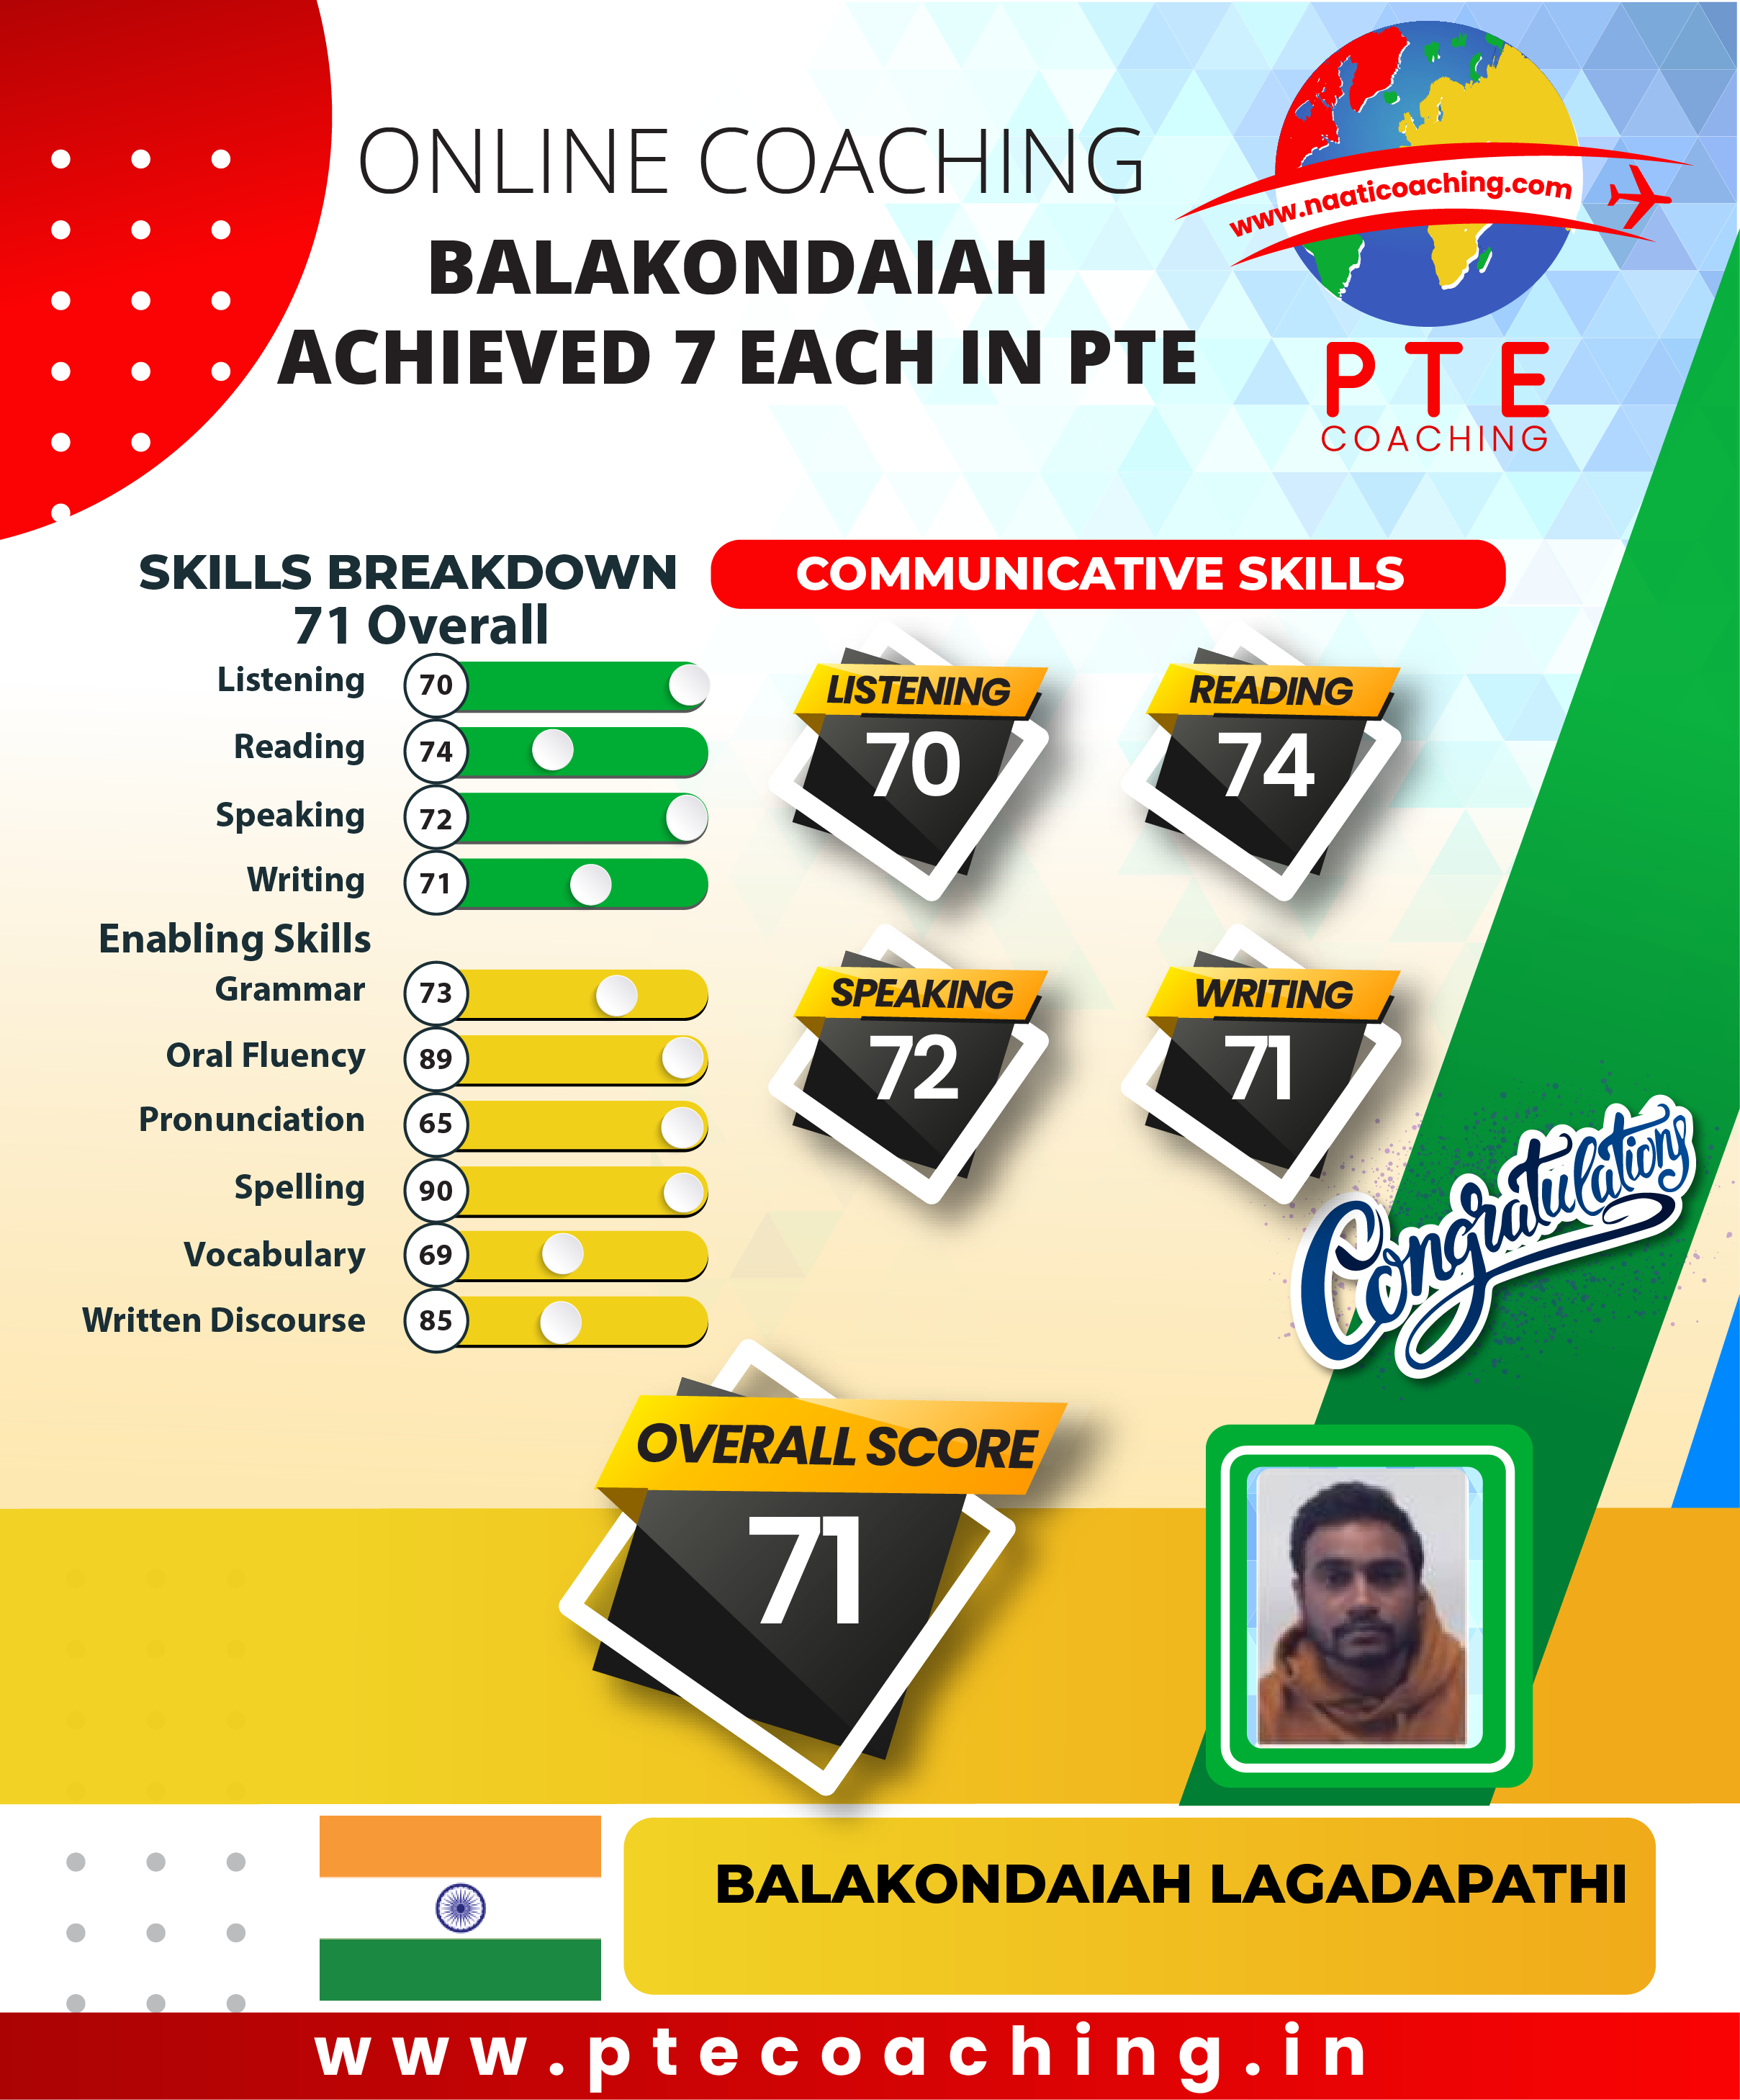 PTE Coaching Scorecard - Balakondaiah achieved 7 each in PTE